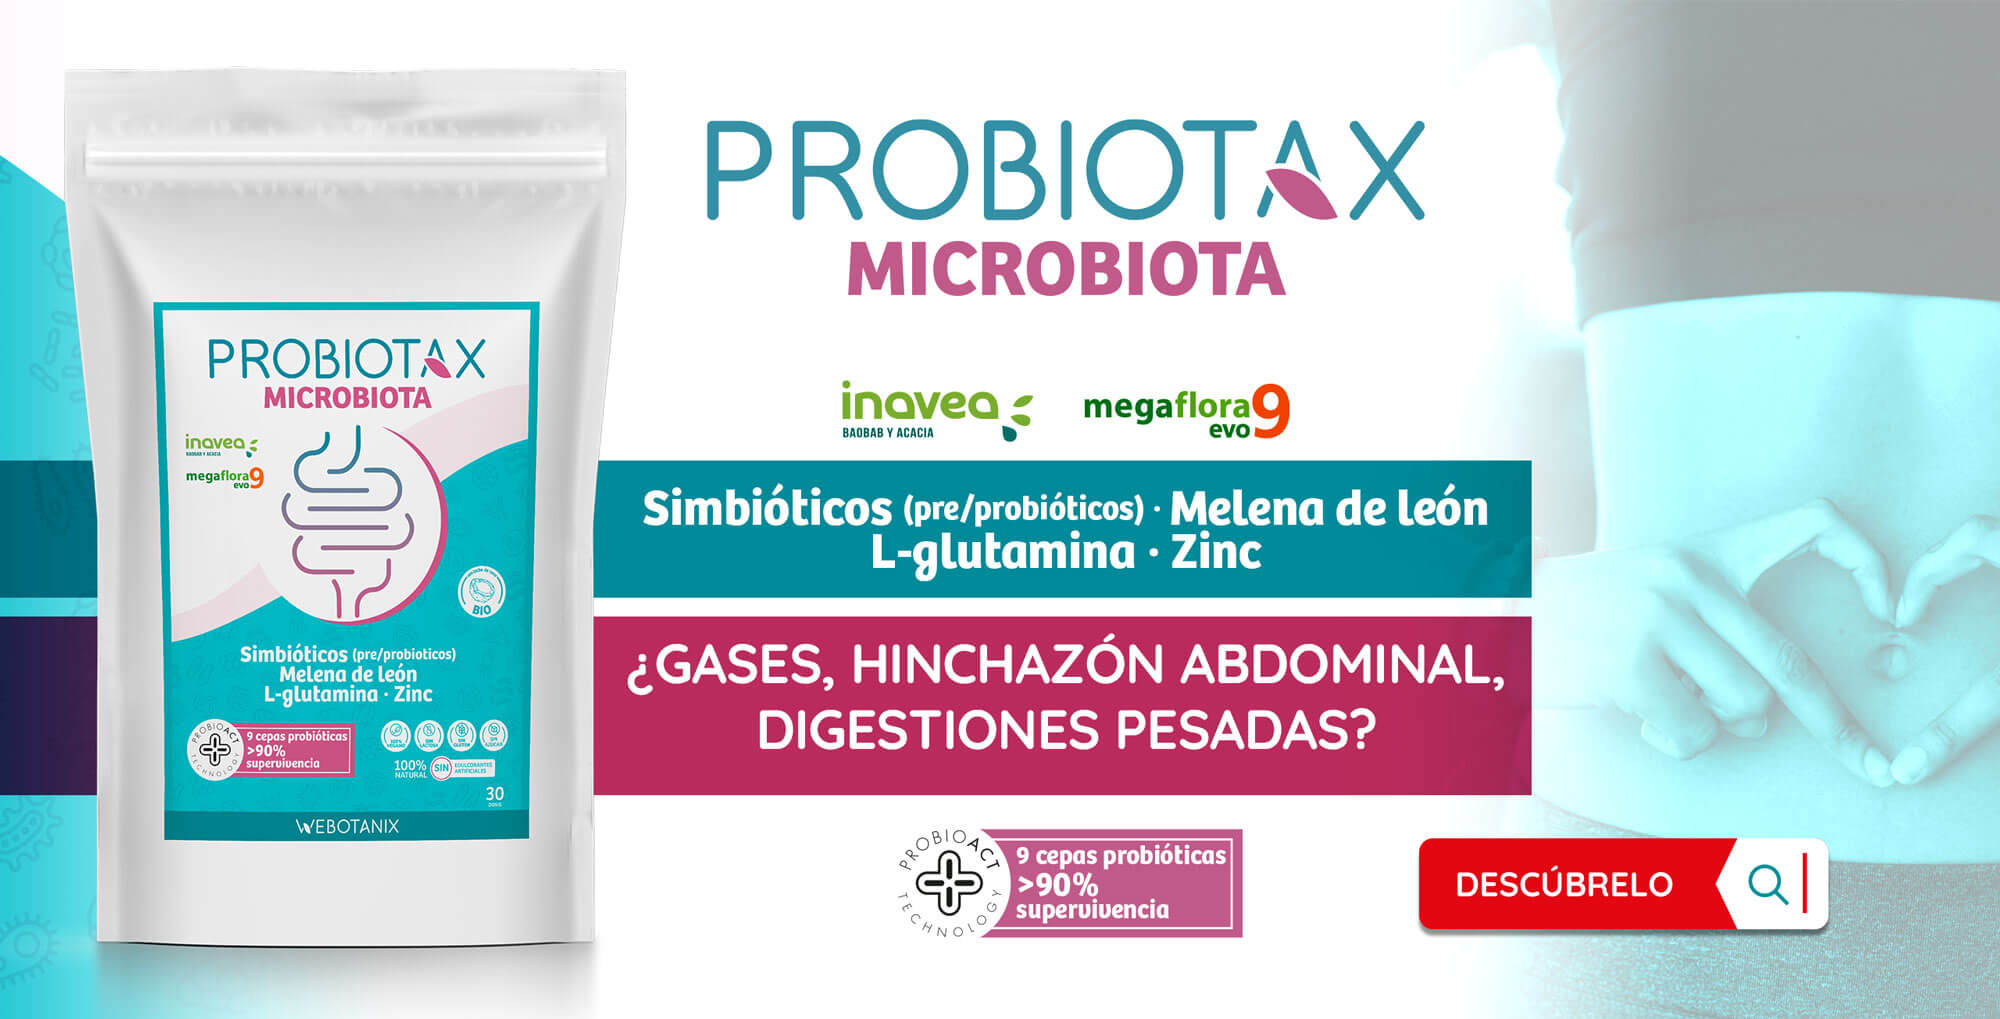 probiotax microbiota